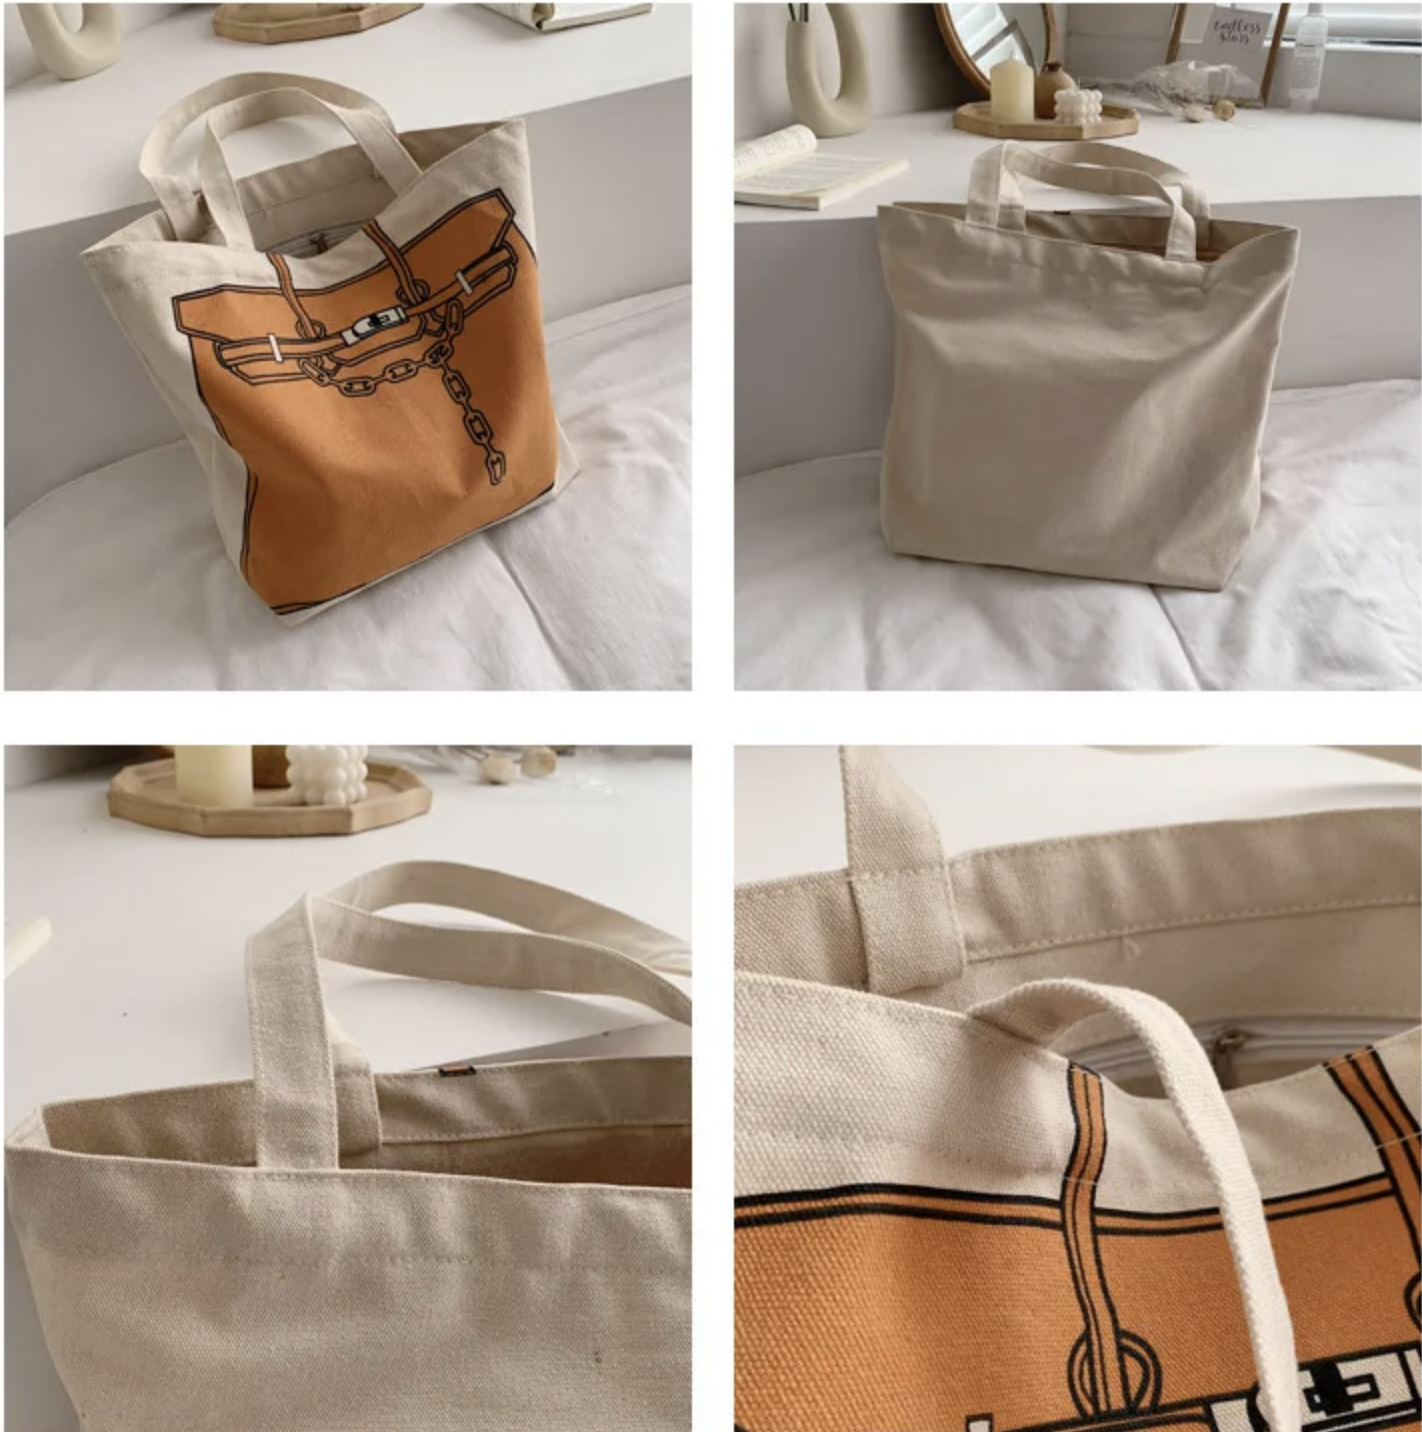 Designer Bag Printed Tote Bag, Birkin Bag Drawing Canvas Bag, Reusable bag, shopping bag, women’s gift, Mother’s Day gift, birthday gift